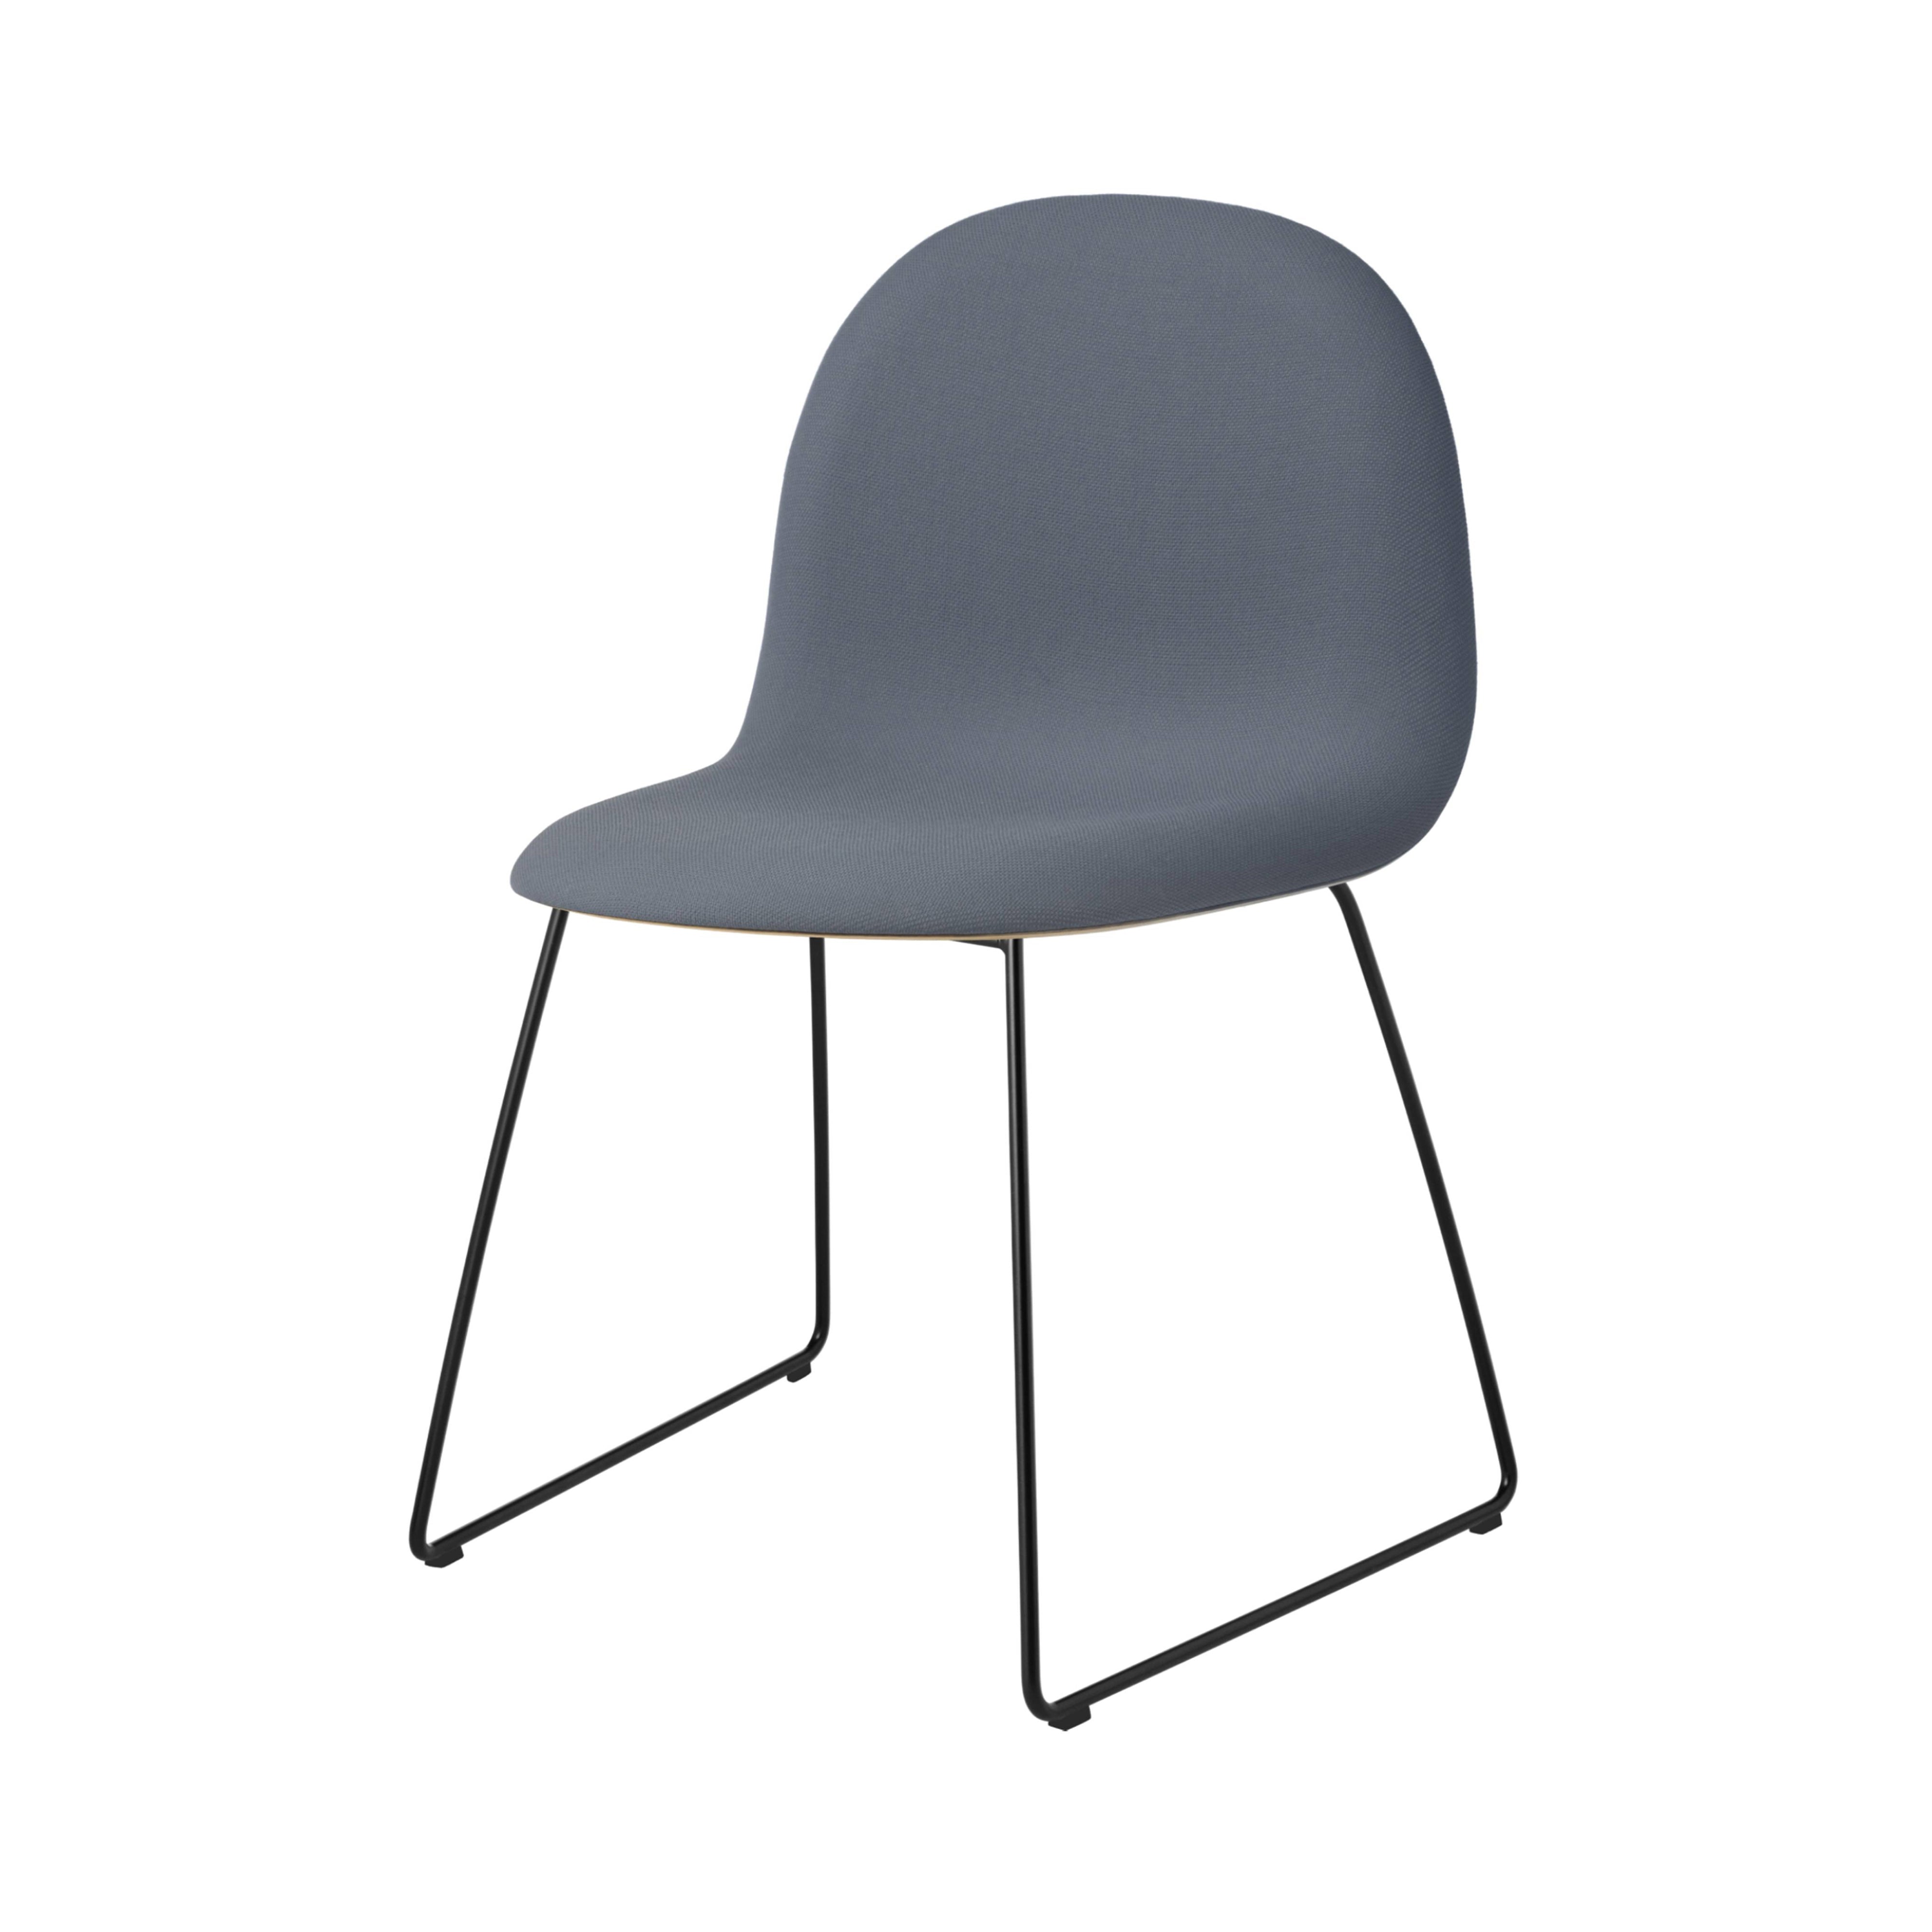 3D Dining Wood Chair: Sledge Base + Front Upholstery + American Walnut + Black Semi Matt